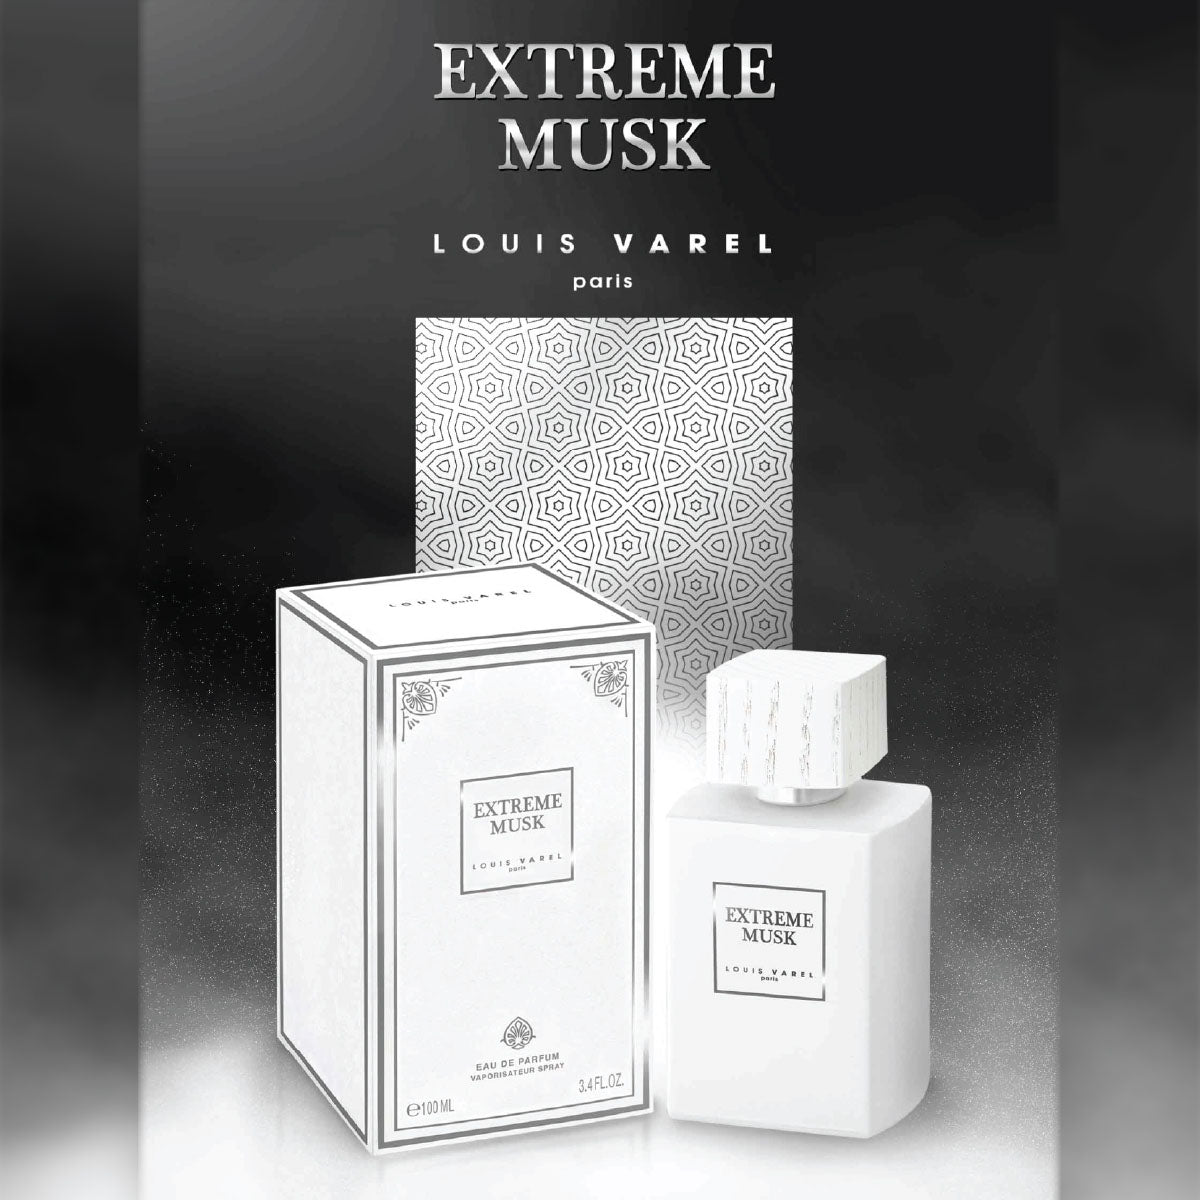 Louis Varel, Extreme Musk EDP 100ml Perfume